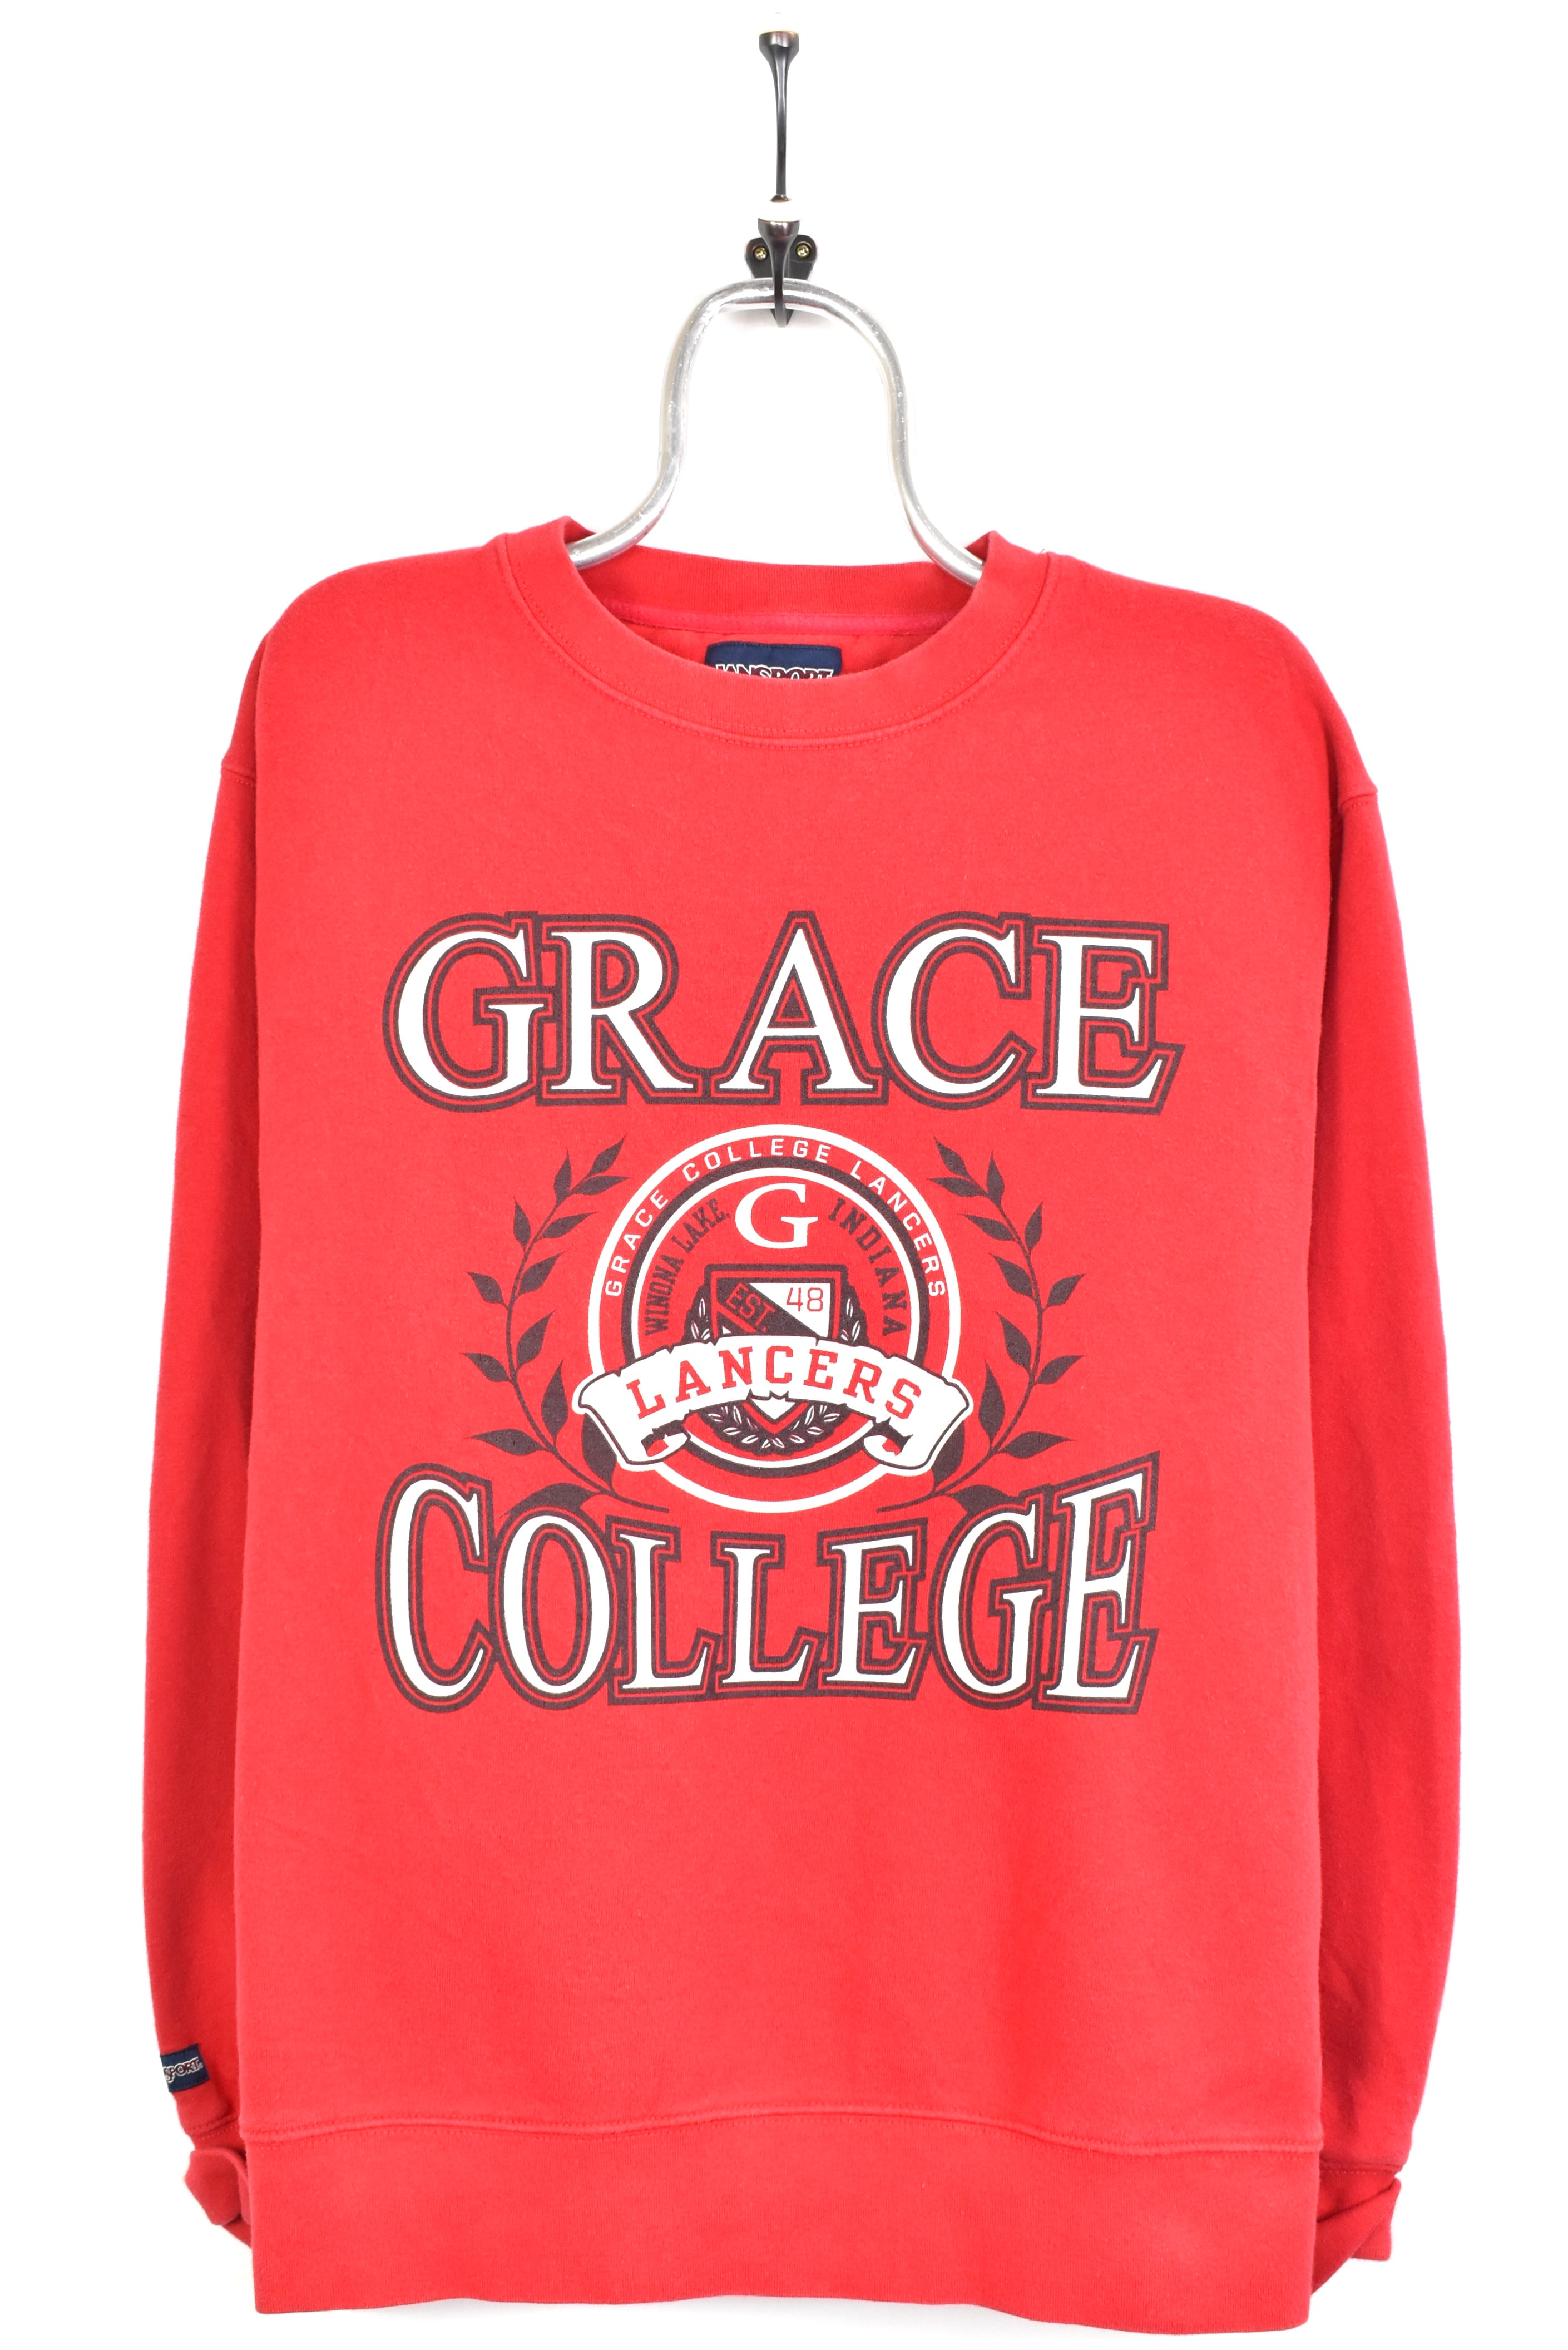 Vintage Grace College red sweatshirt | Medium COLLEGE